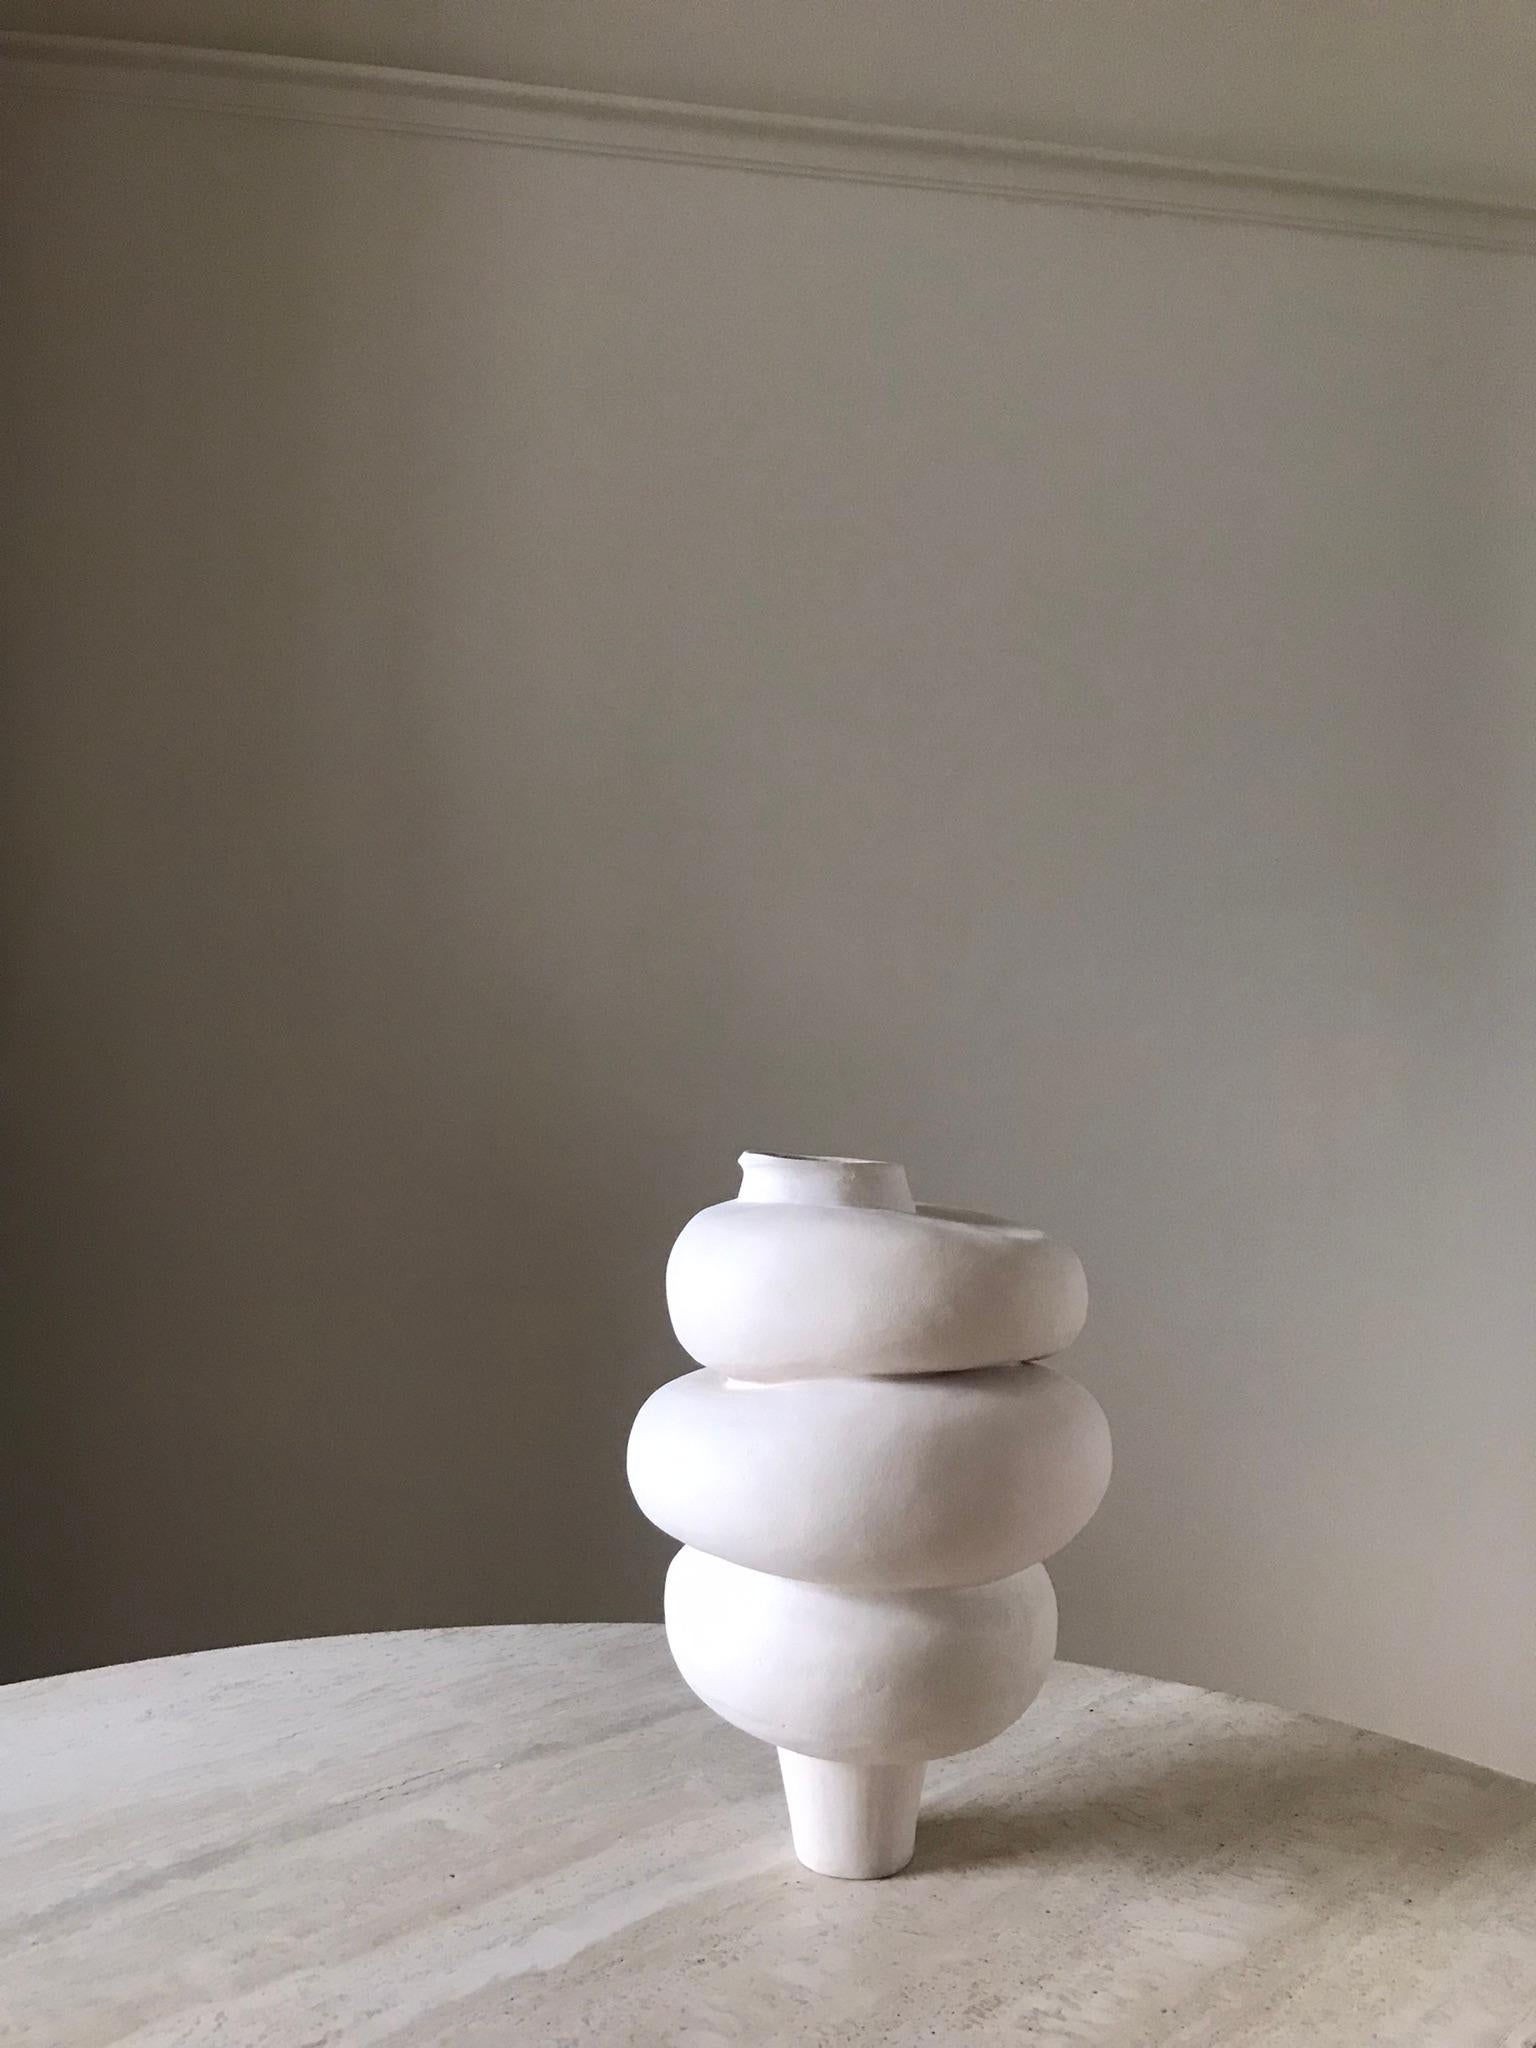 Unglazed Dutch Contemporary Sculptural Ceramic Art Modder in Touch by Françoise Jeffrey For Sale